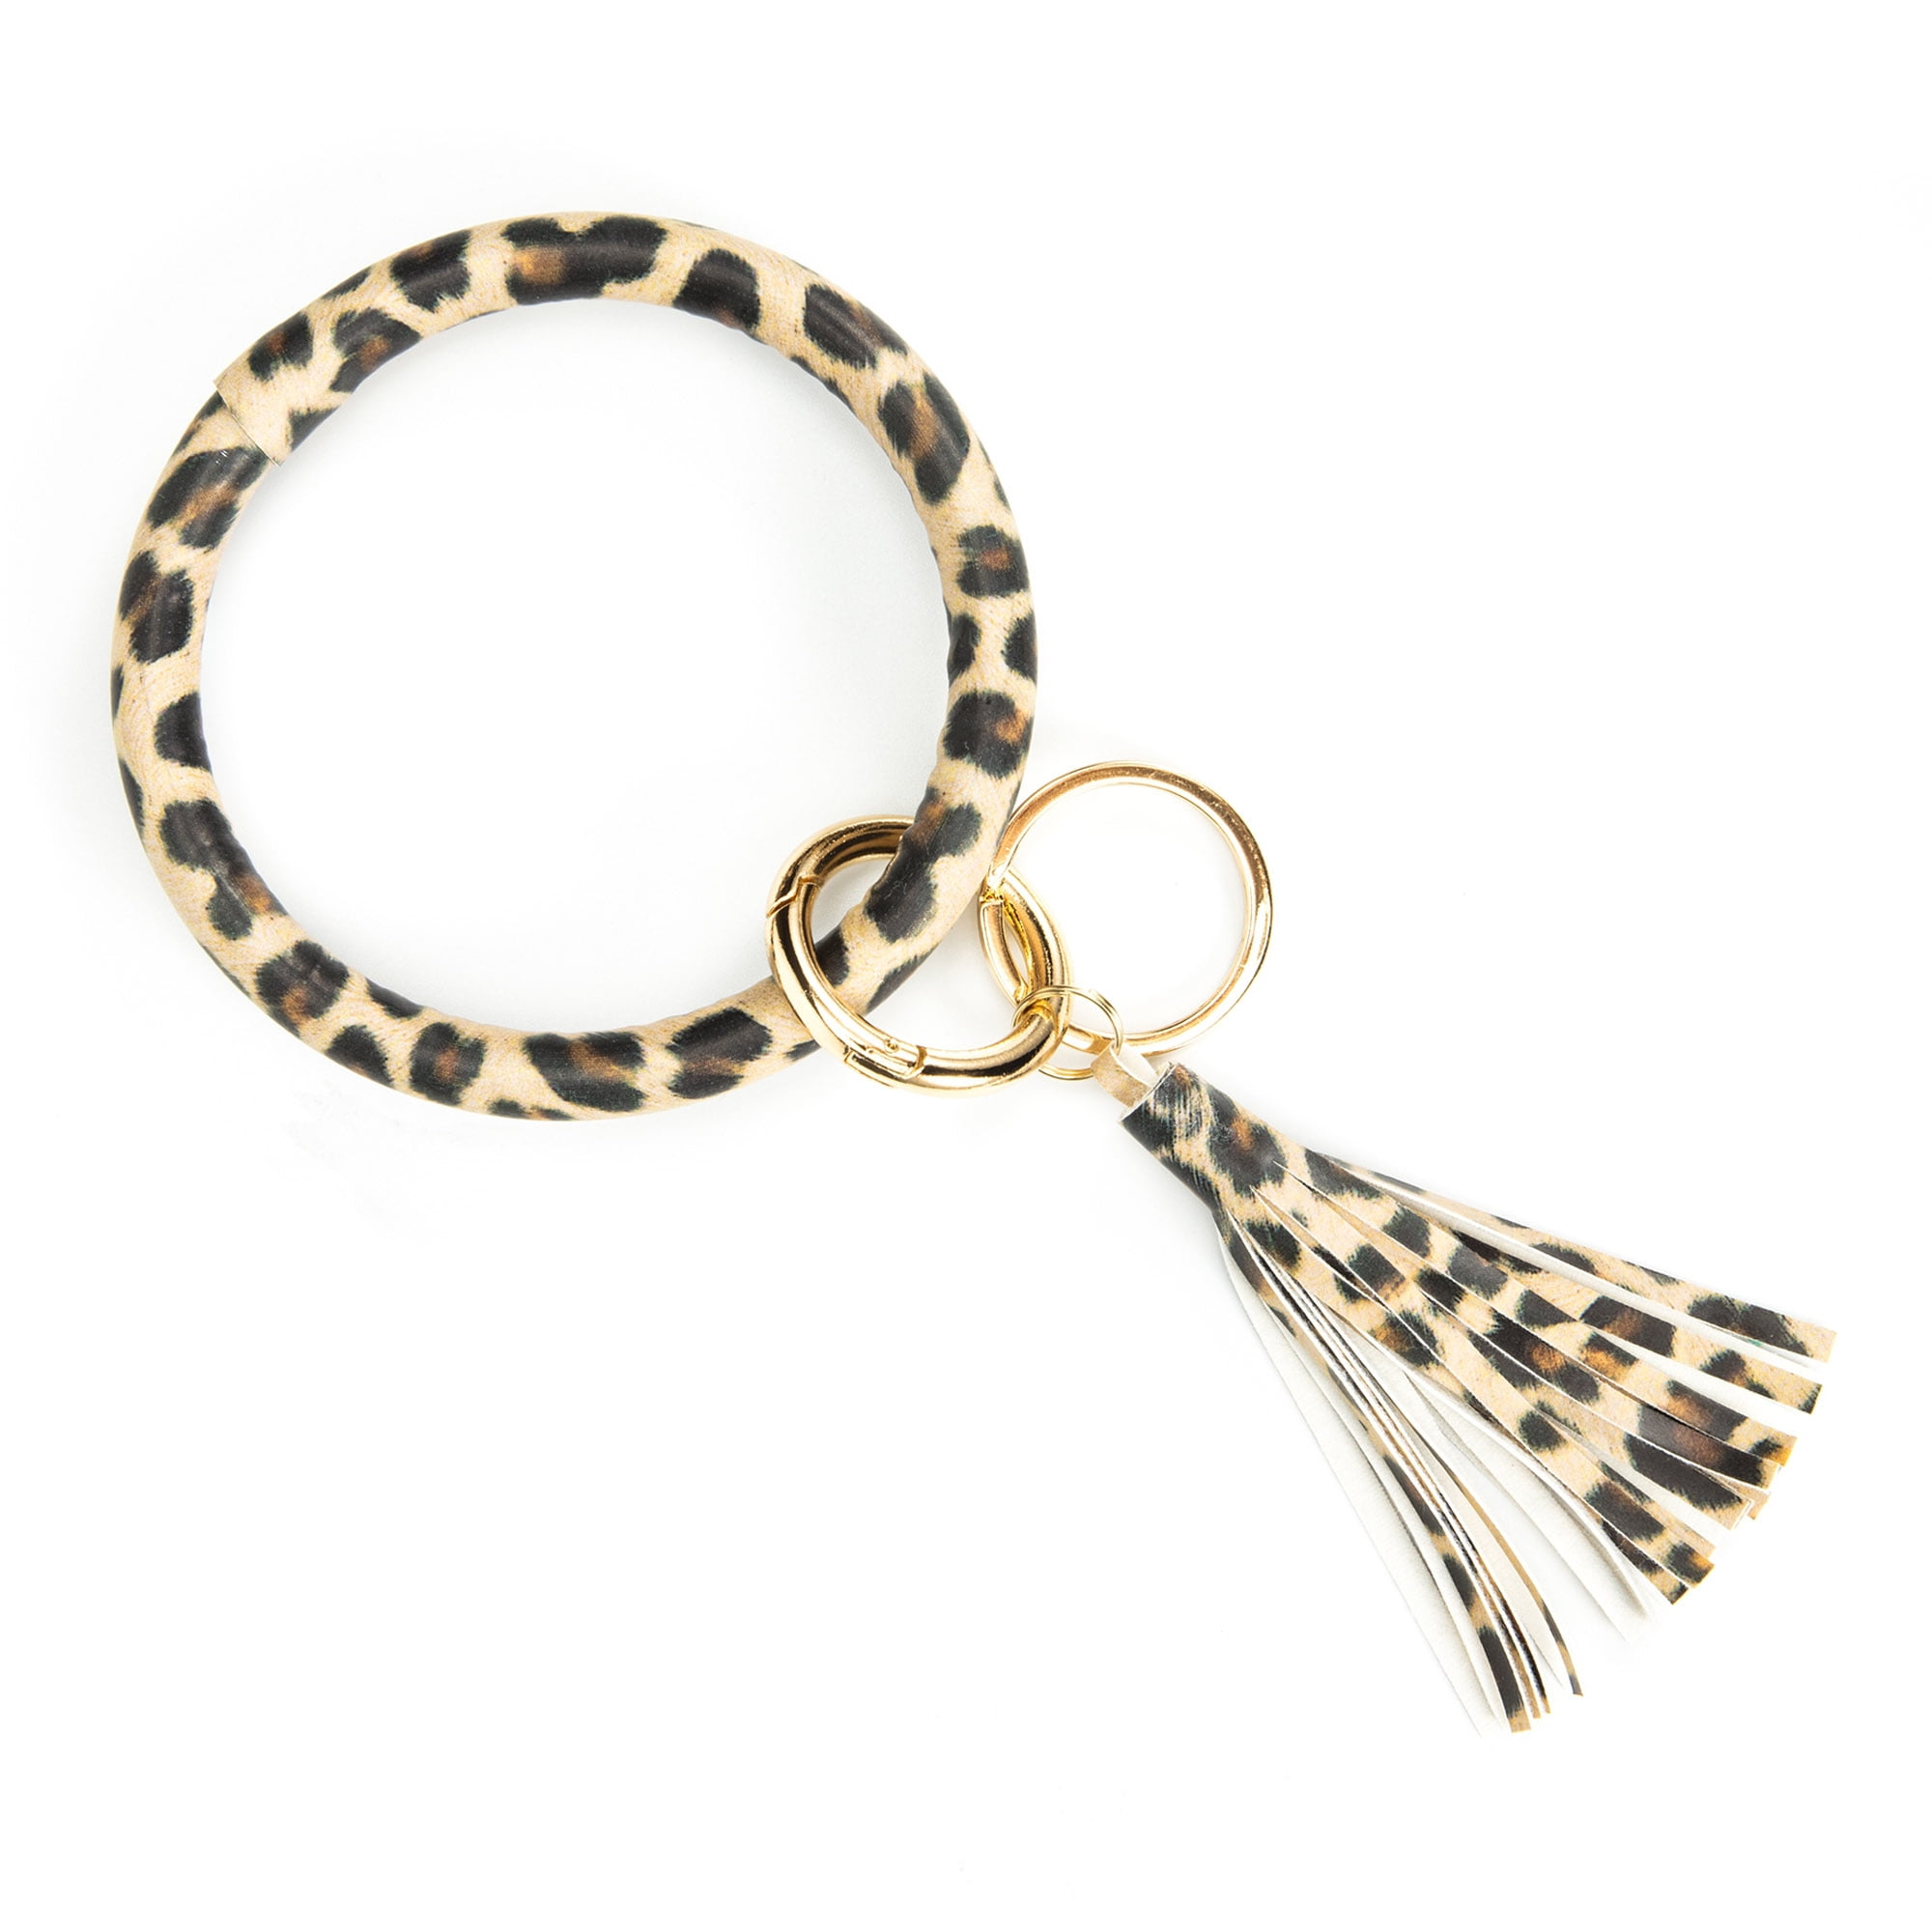 Silicone Key Ring Tassel Bracelet,Bracelet Wristband Keychain,Round Key Ring Chain,Portable Metal Key Bracelet 